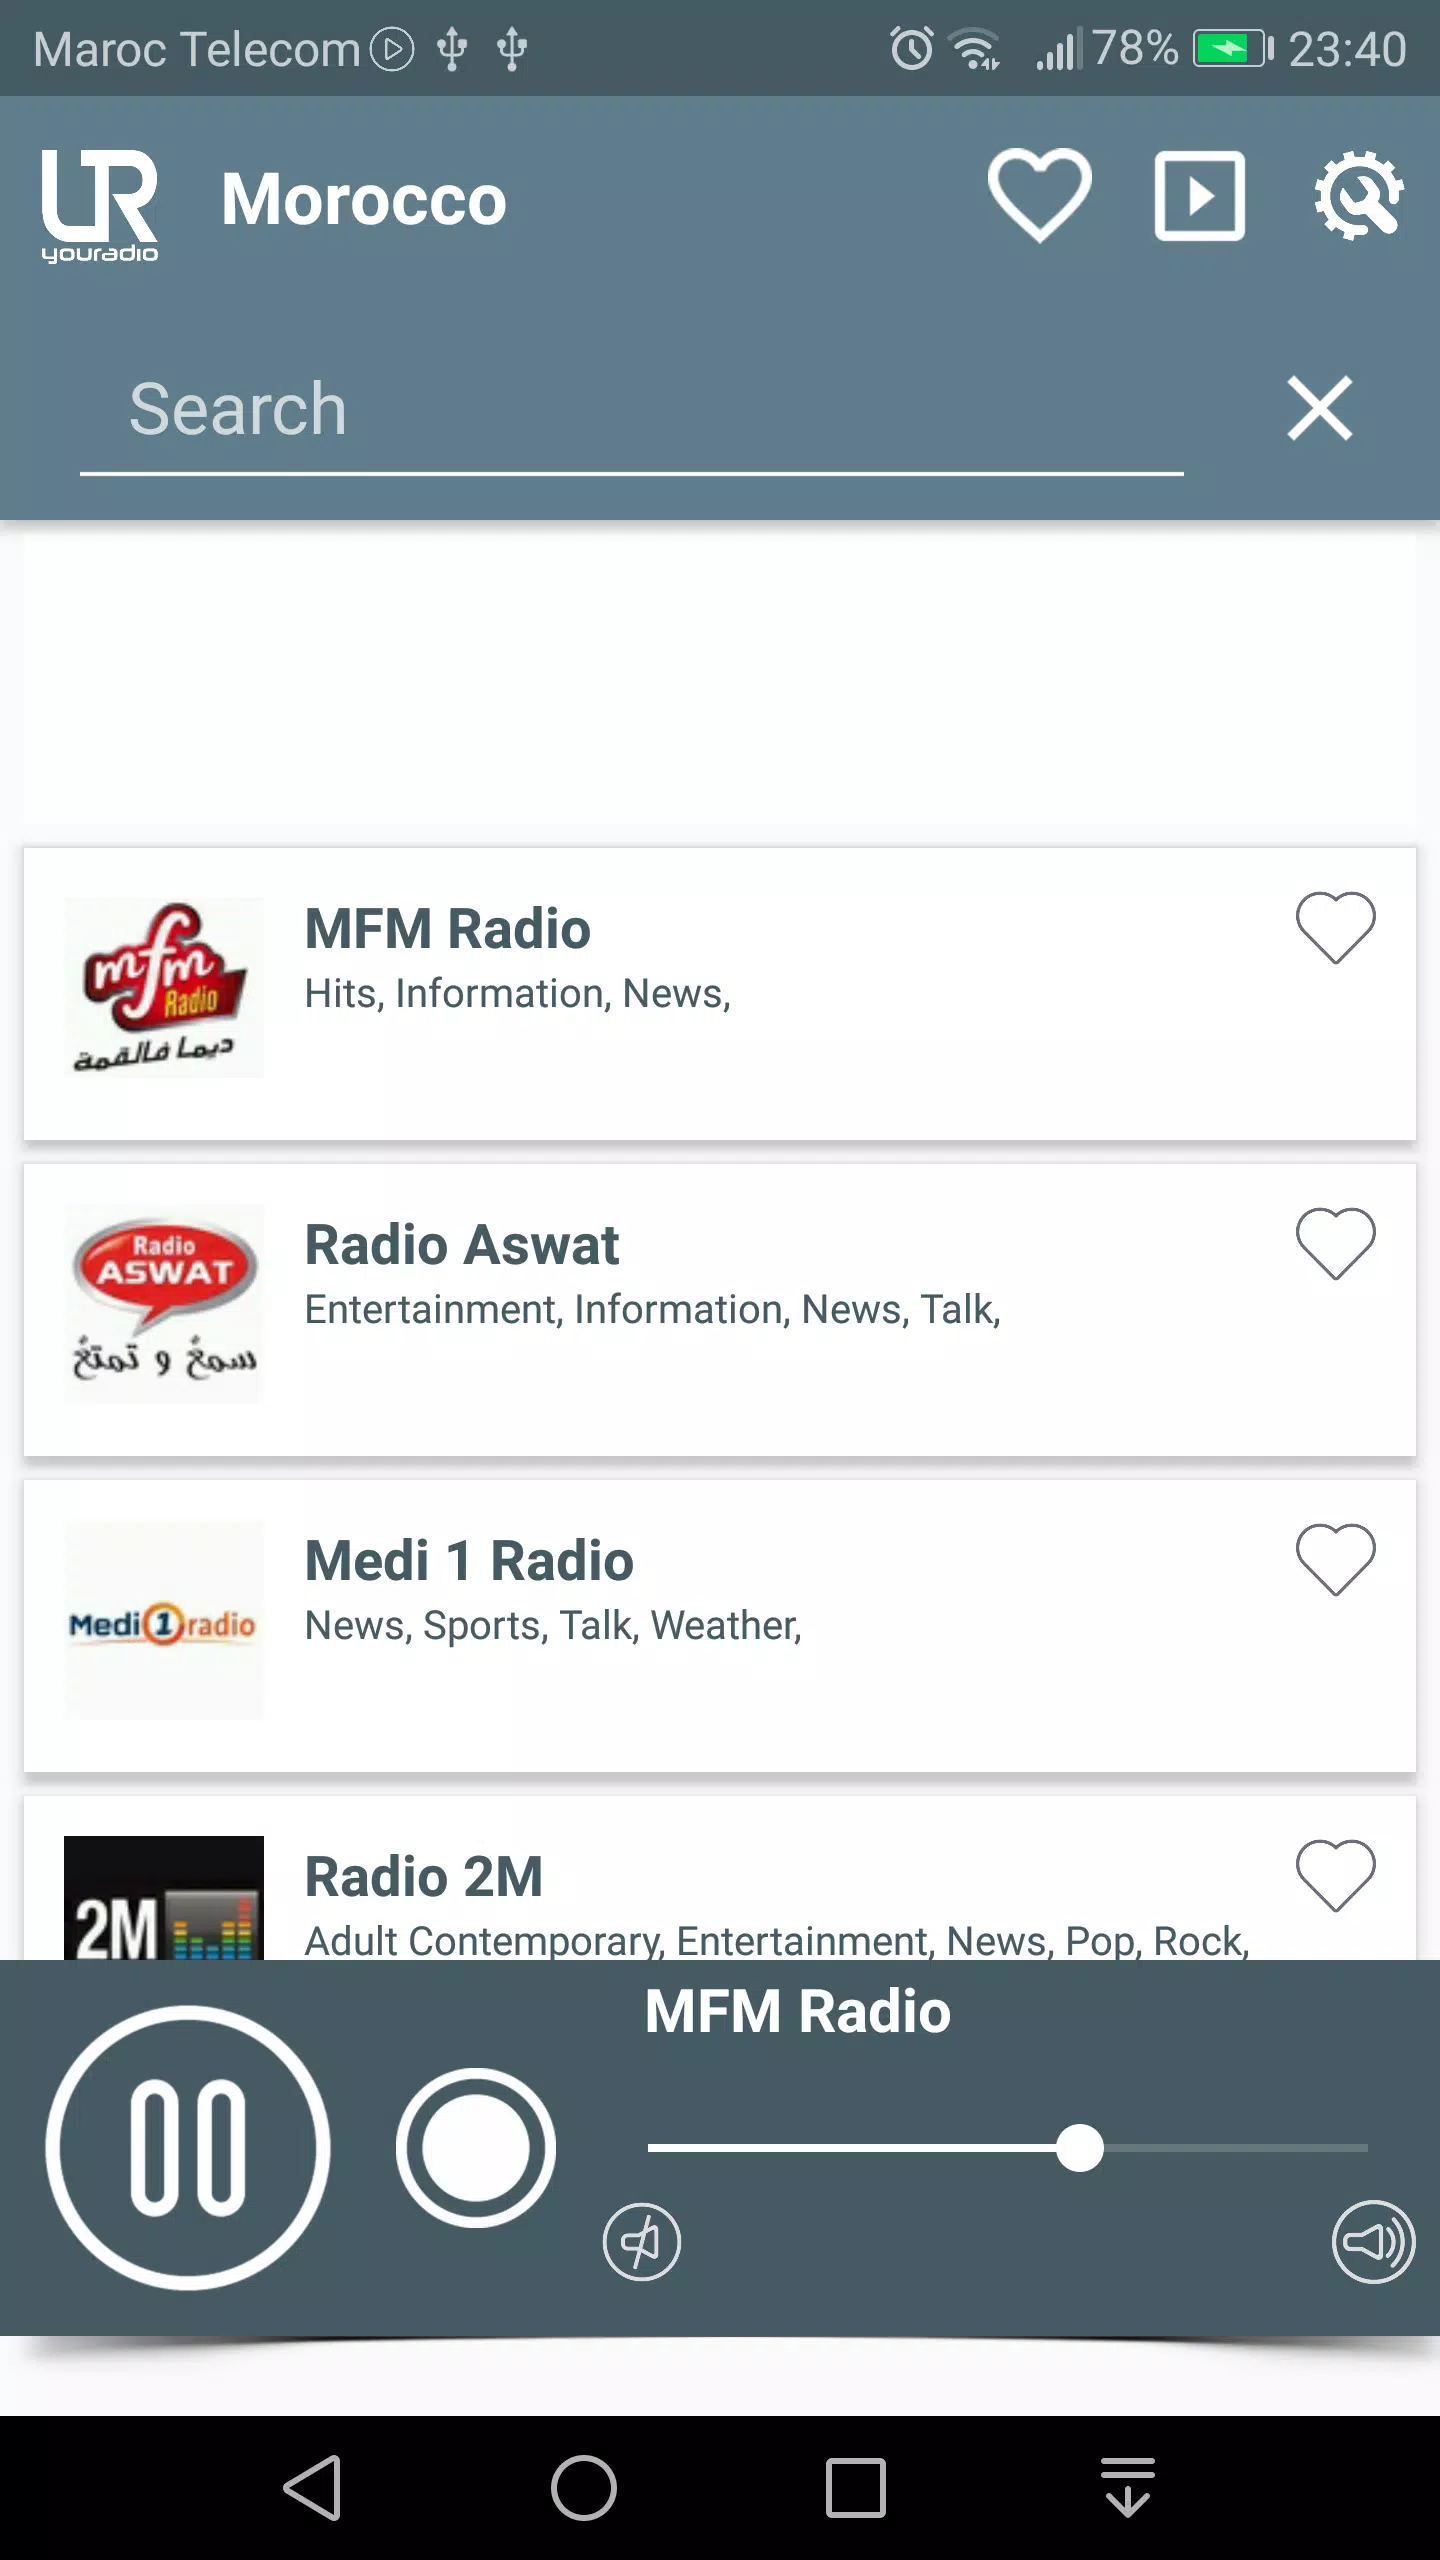 URadio - Free Online Radio & Audio Recorder for Android - APK Download